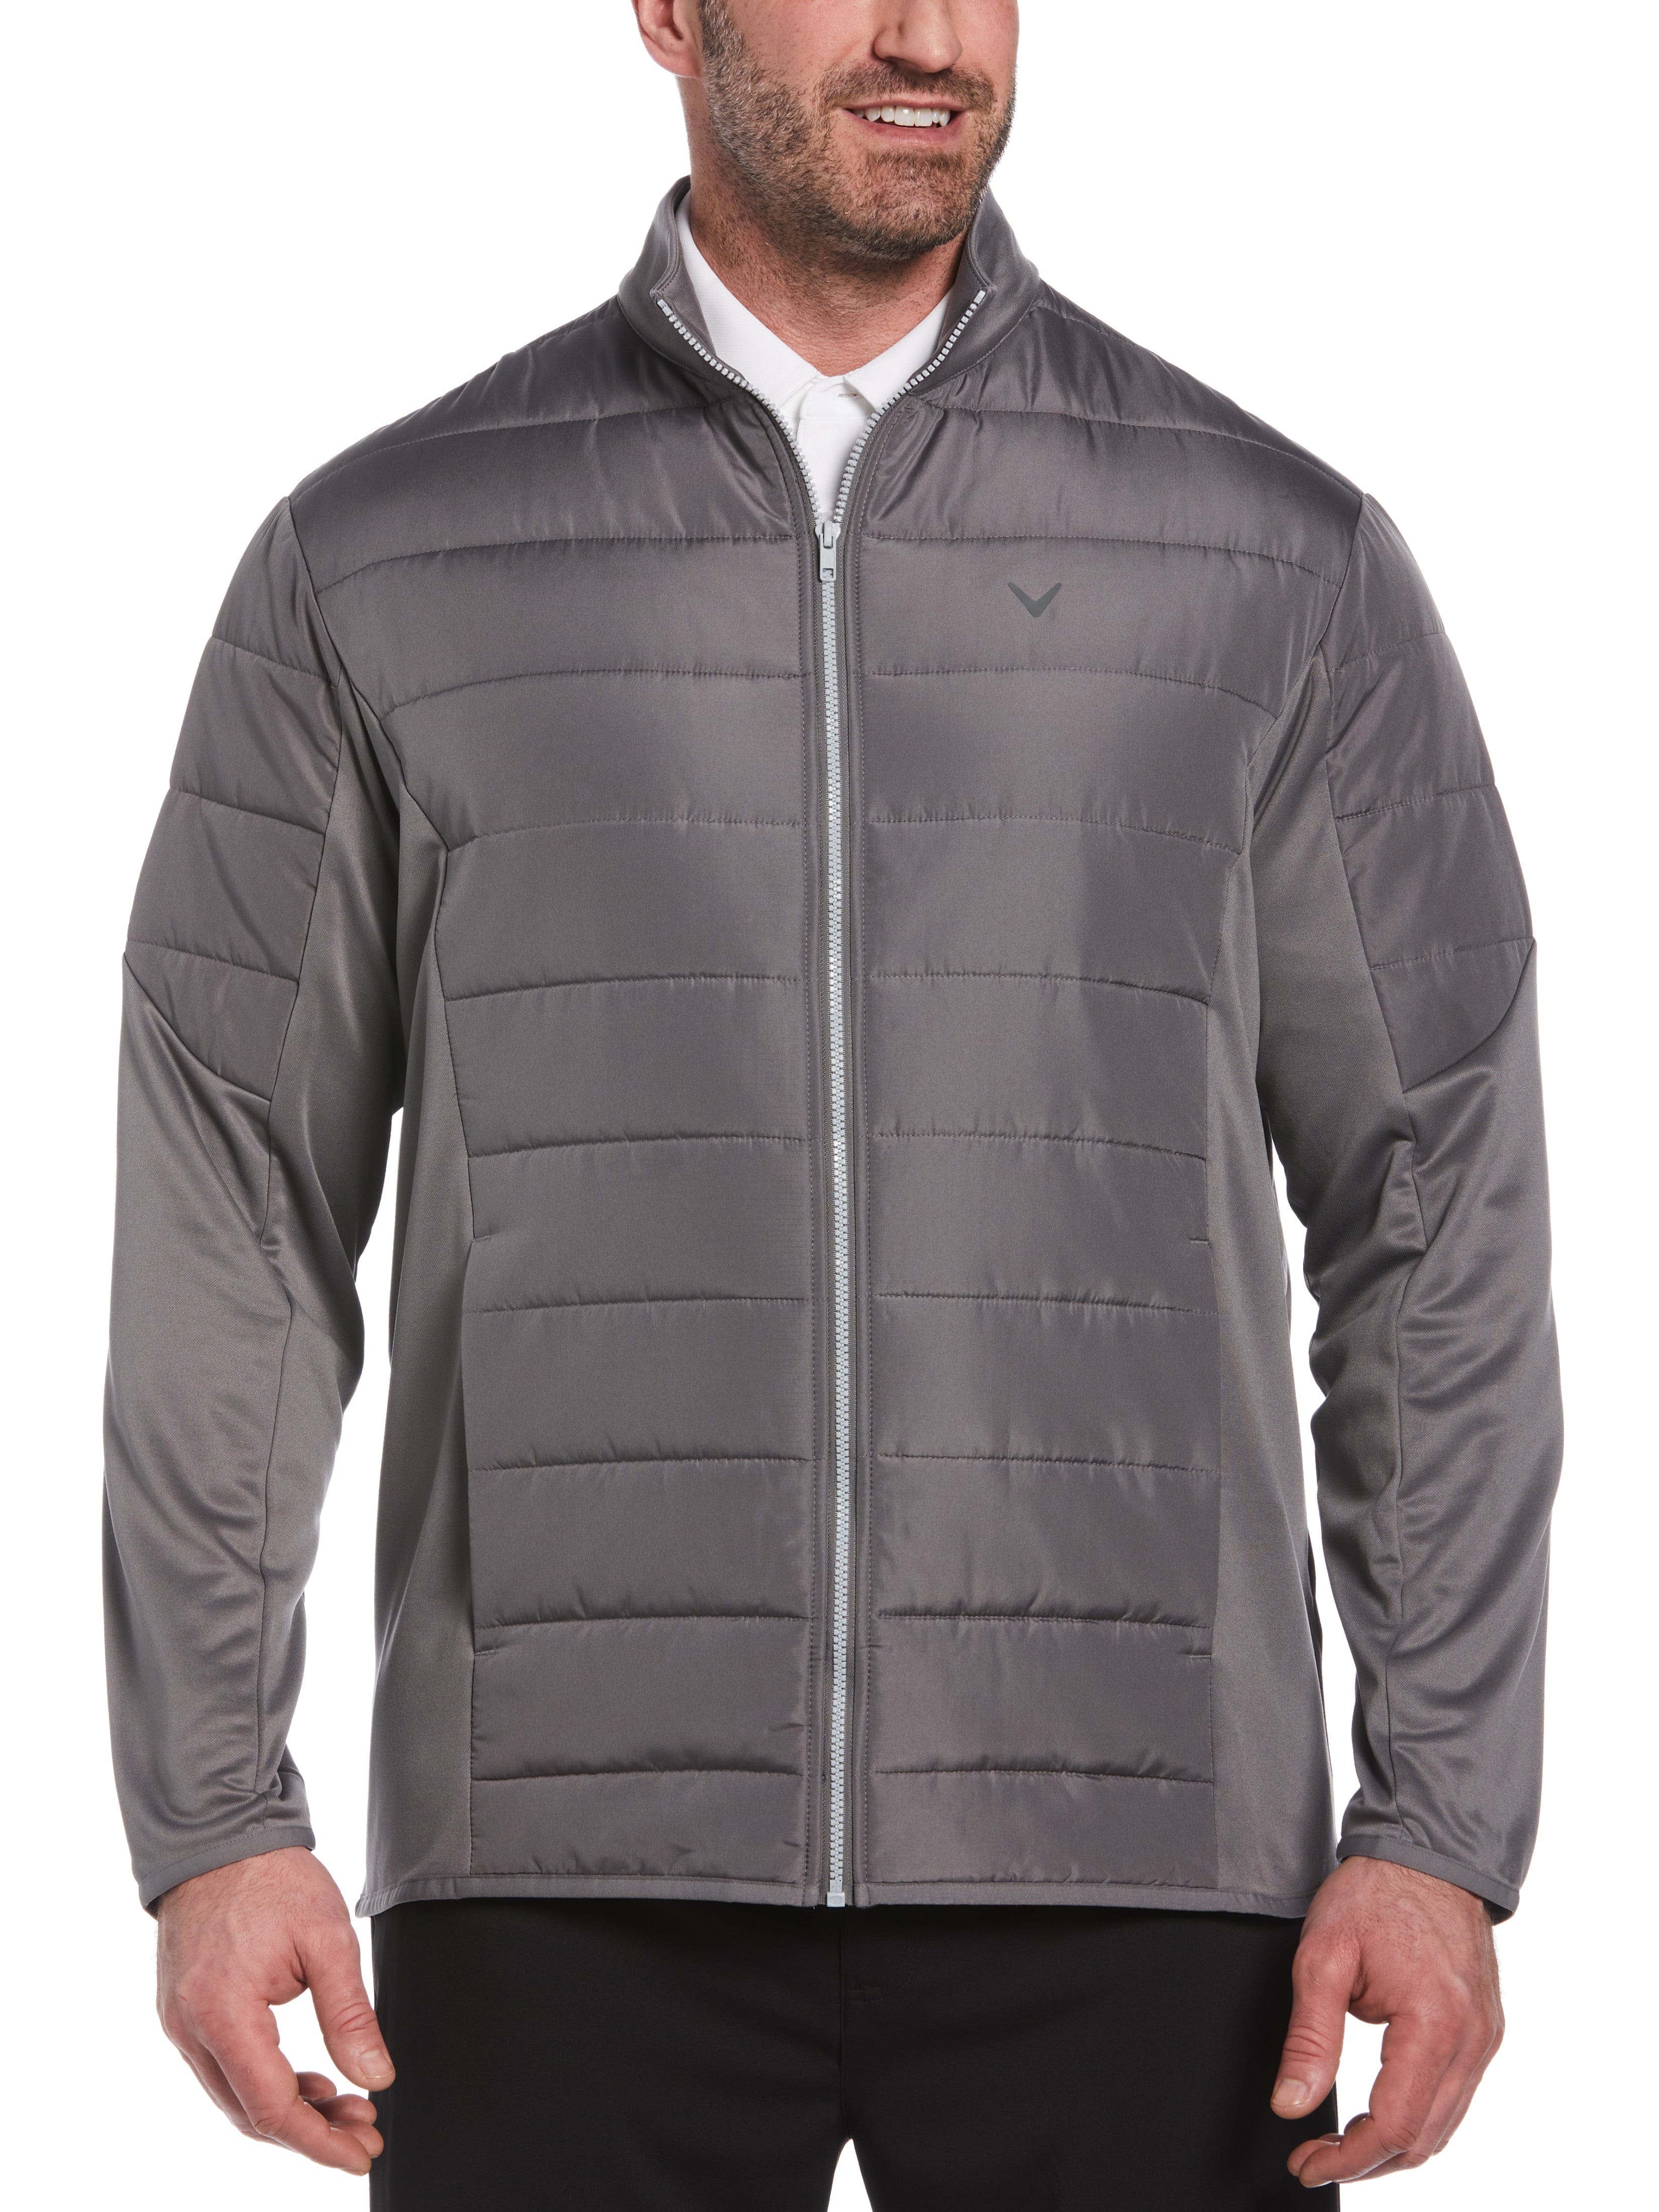 Callaway Apparel Mens Big & Tall Hybrid Performance Puffer Jacket Top, Size 3XLT, Quiet Shade Gray, 100% Polyester | Golf Apparel Shop